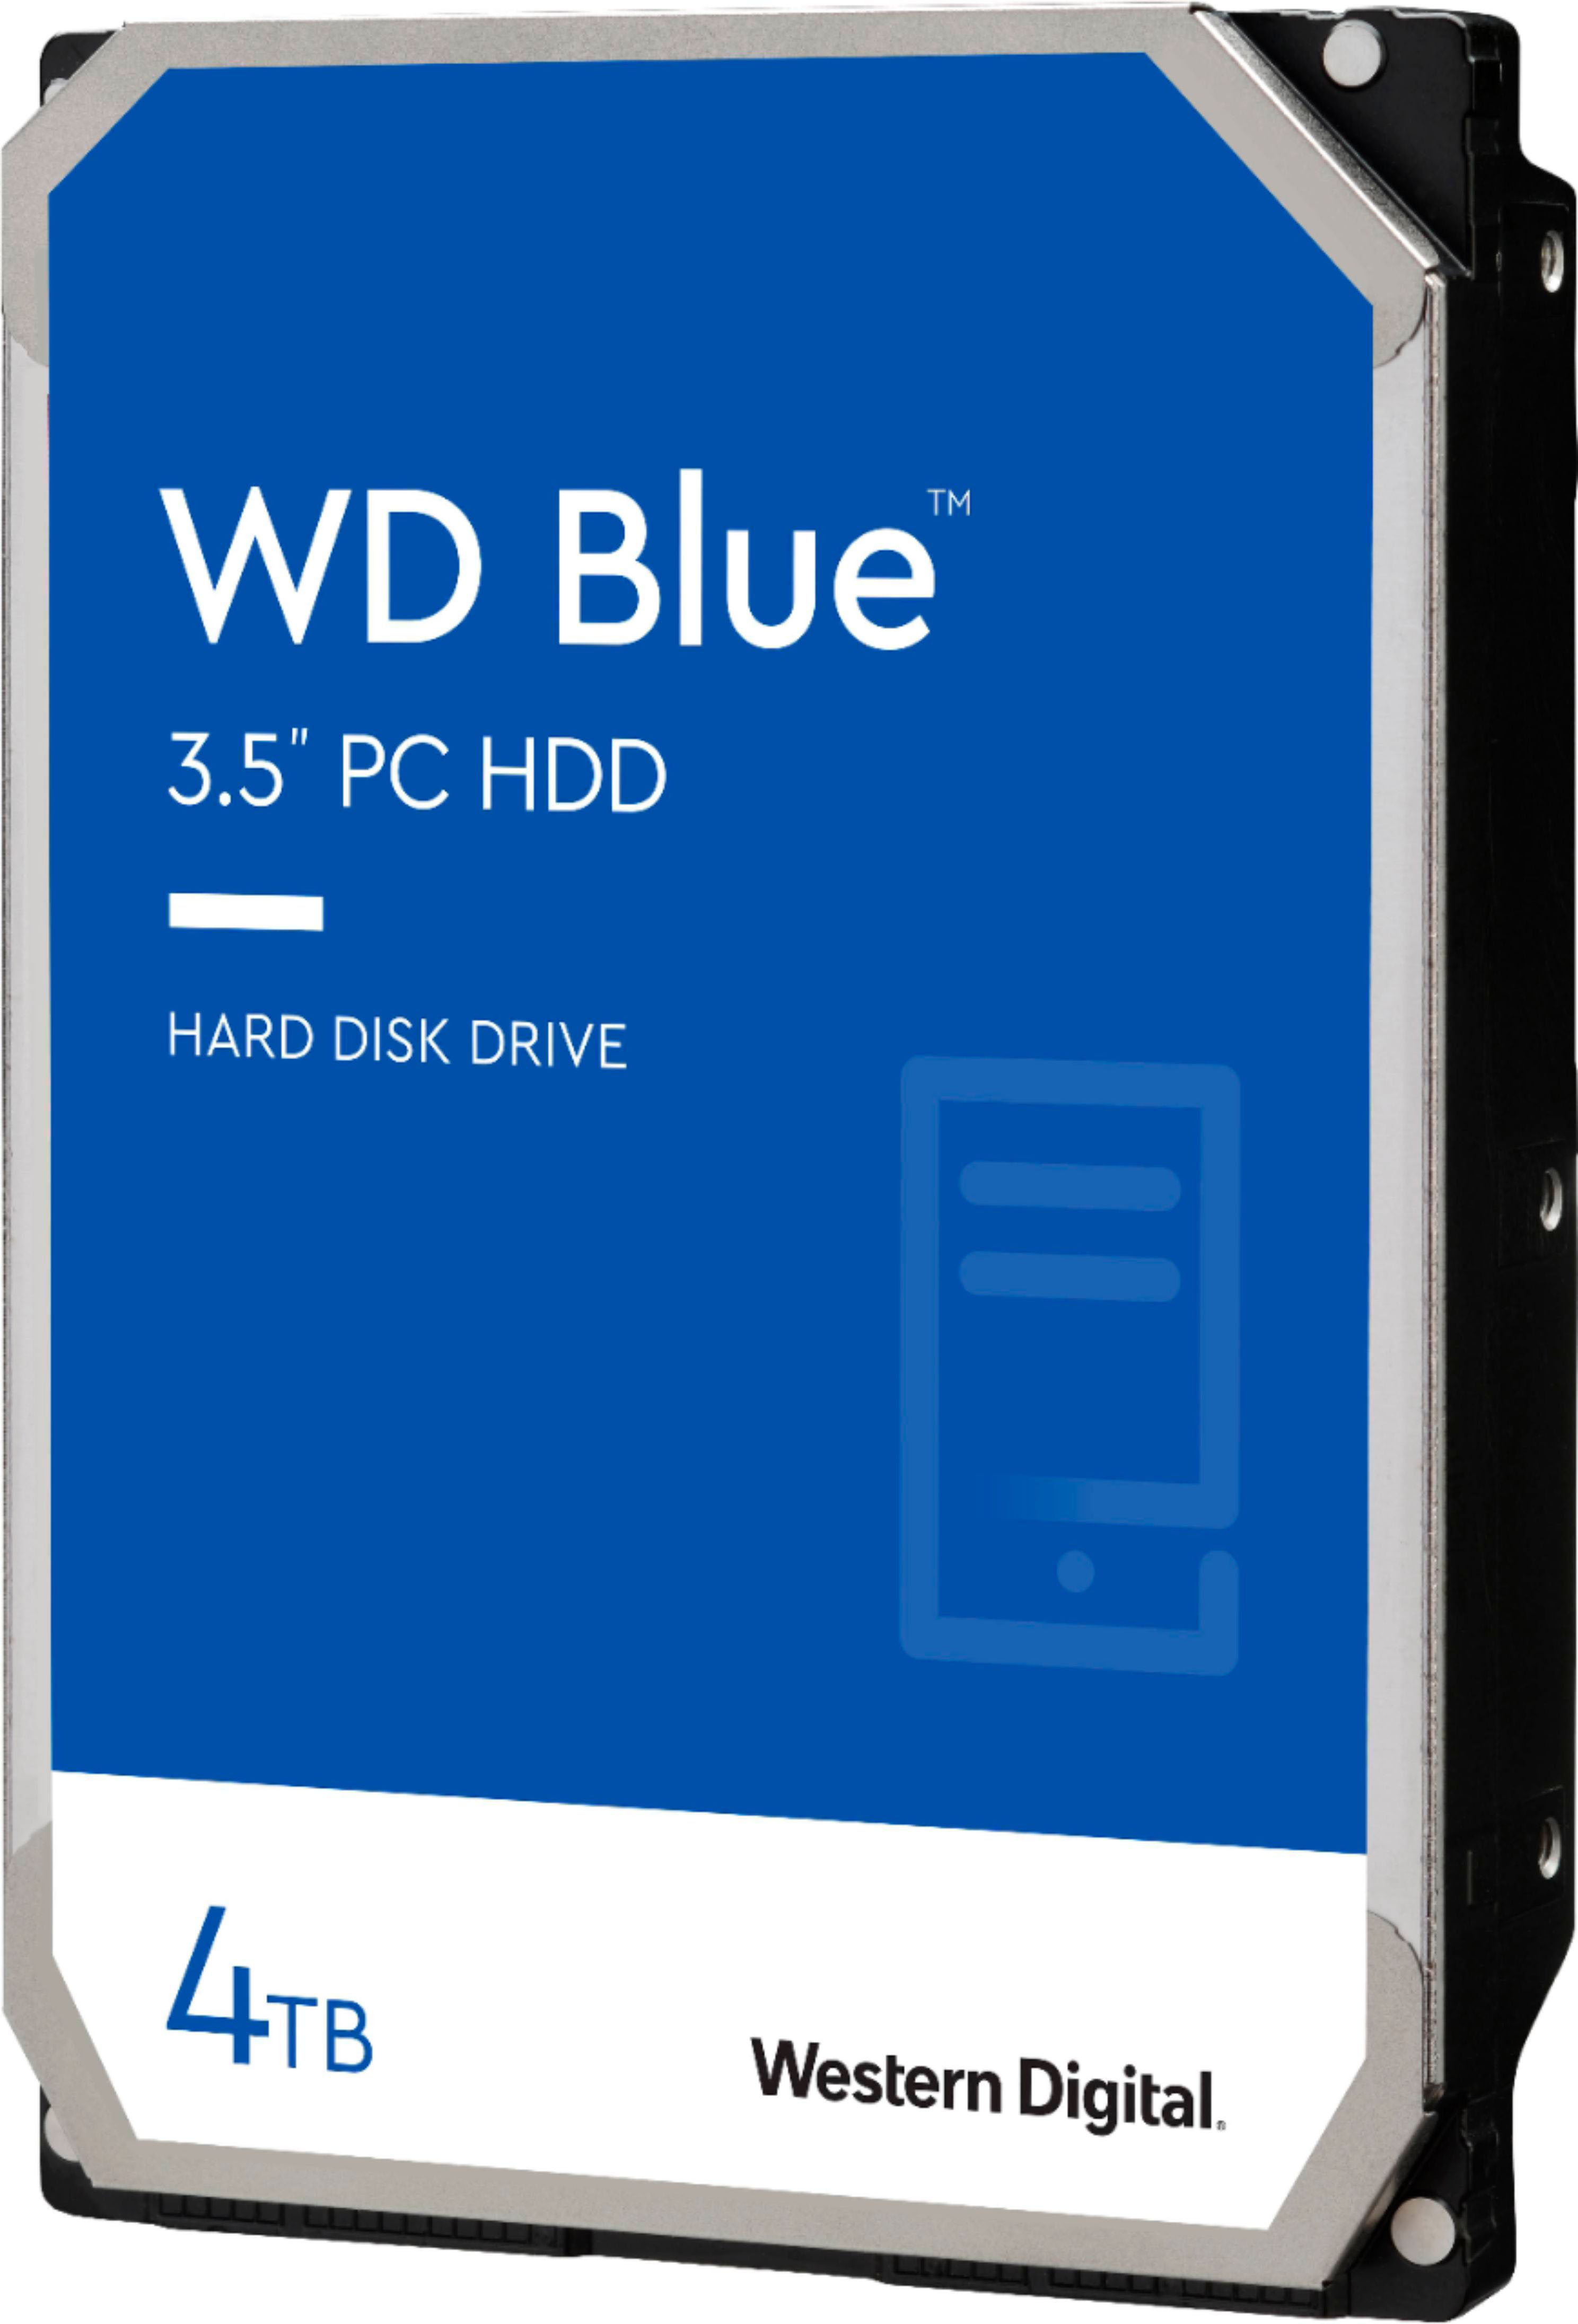 WD Blue 4TB Internal SATA Hard Drive for Desktops WDBH2D0040HNC-NRSN Best Buy